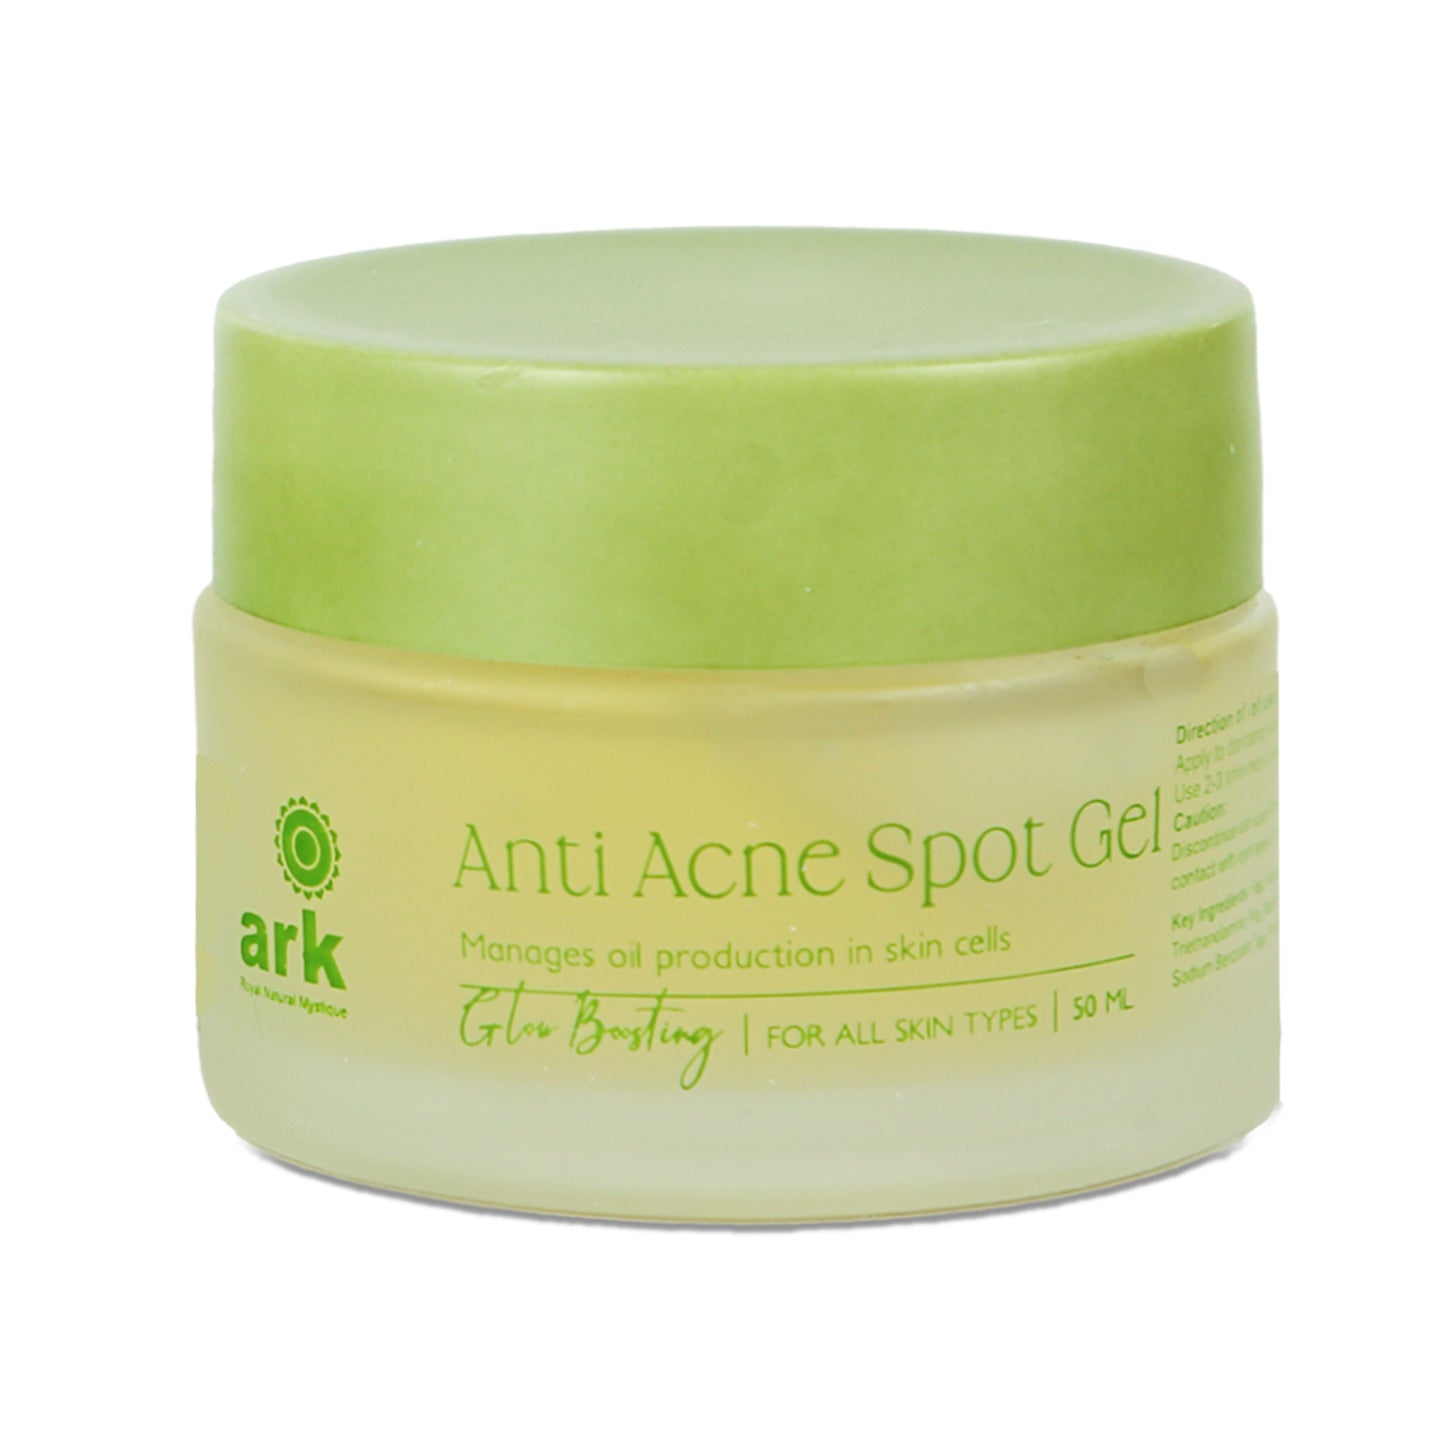 Glow Boosting Anti Acne Spot Gel | Healthy Skin : Ark Natural